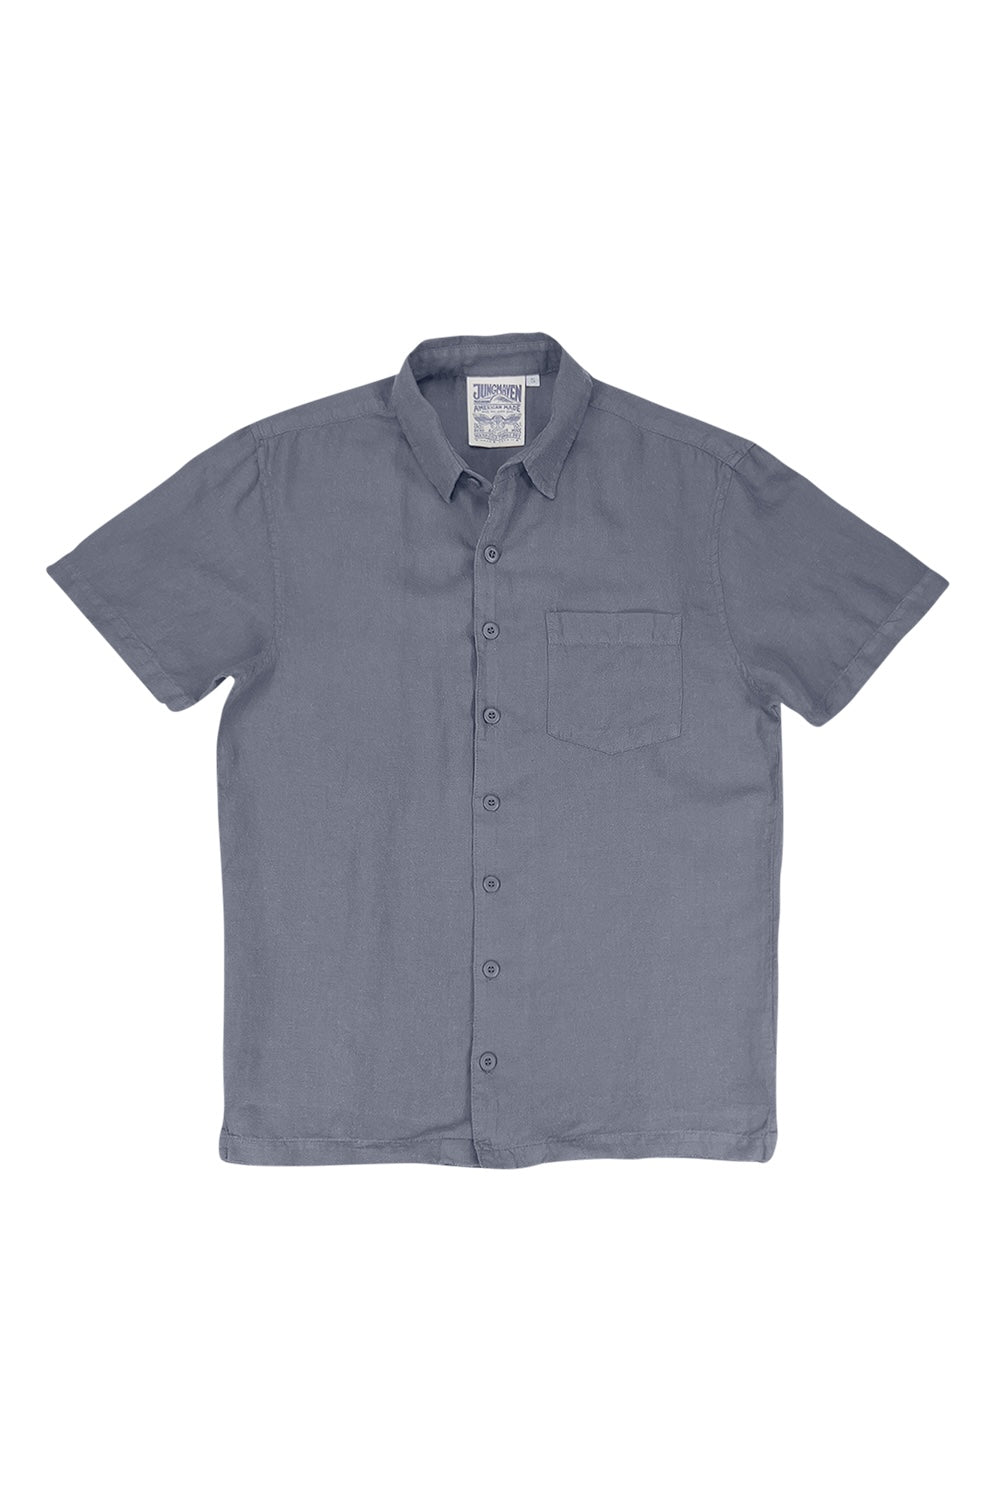 Tornado Shirt | Jungmaven Hemp Clothing & Accessories / Color: Diesel Gray